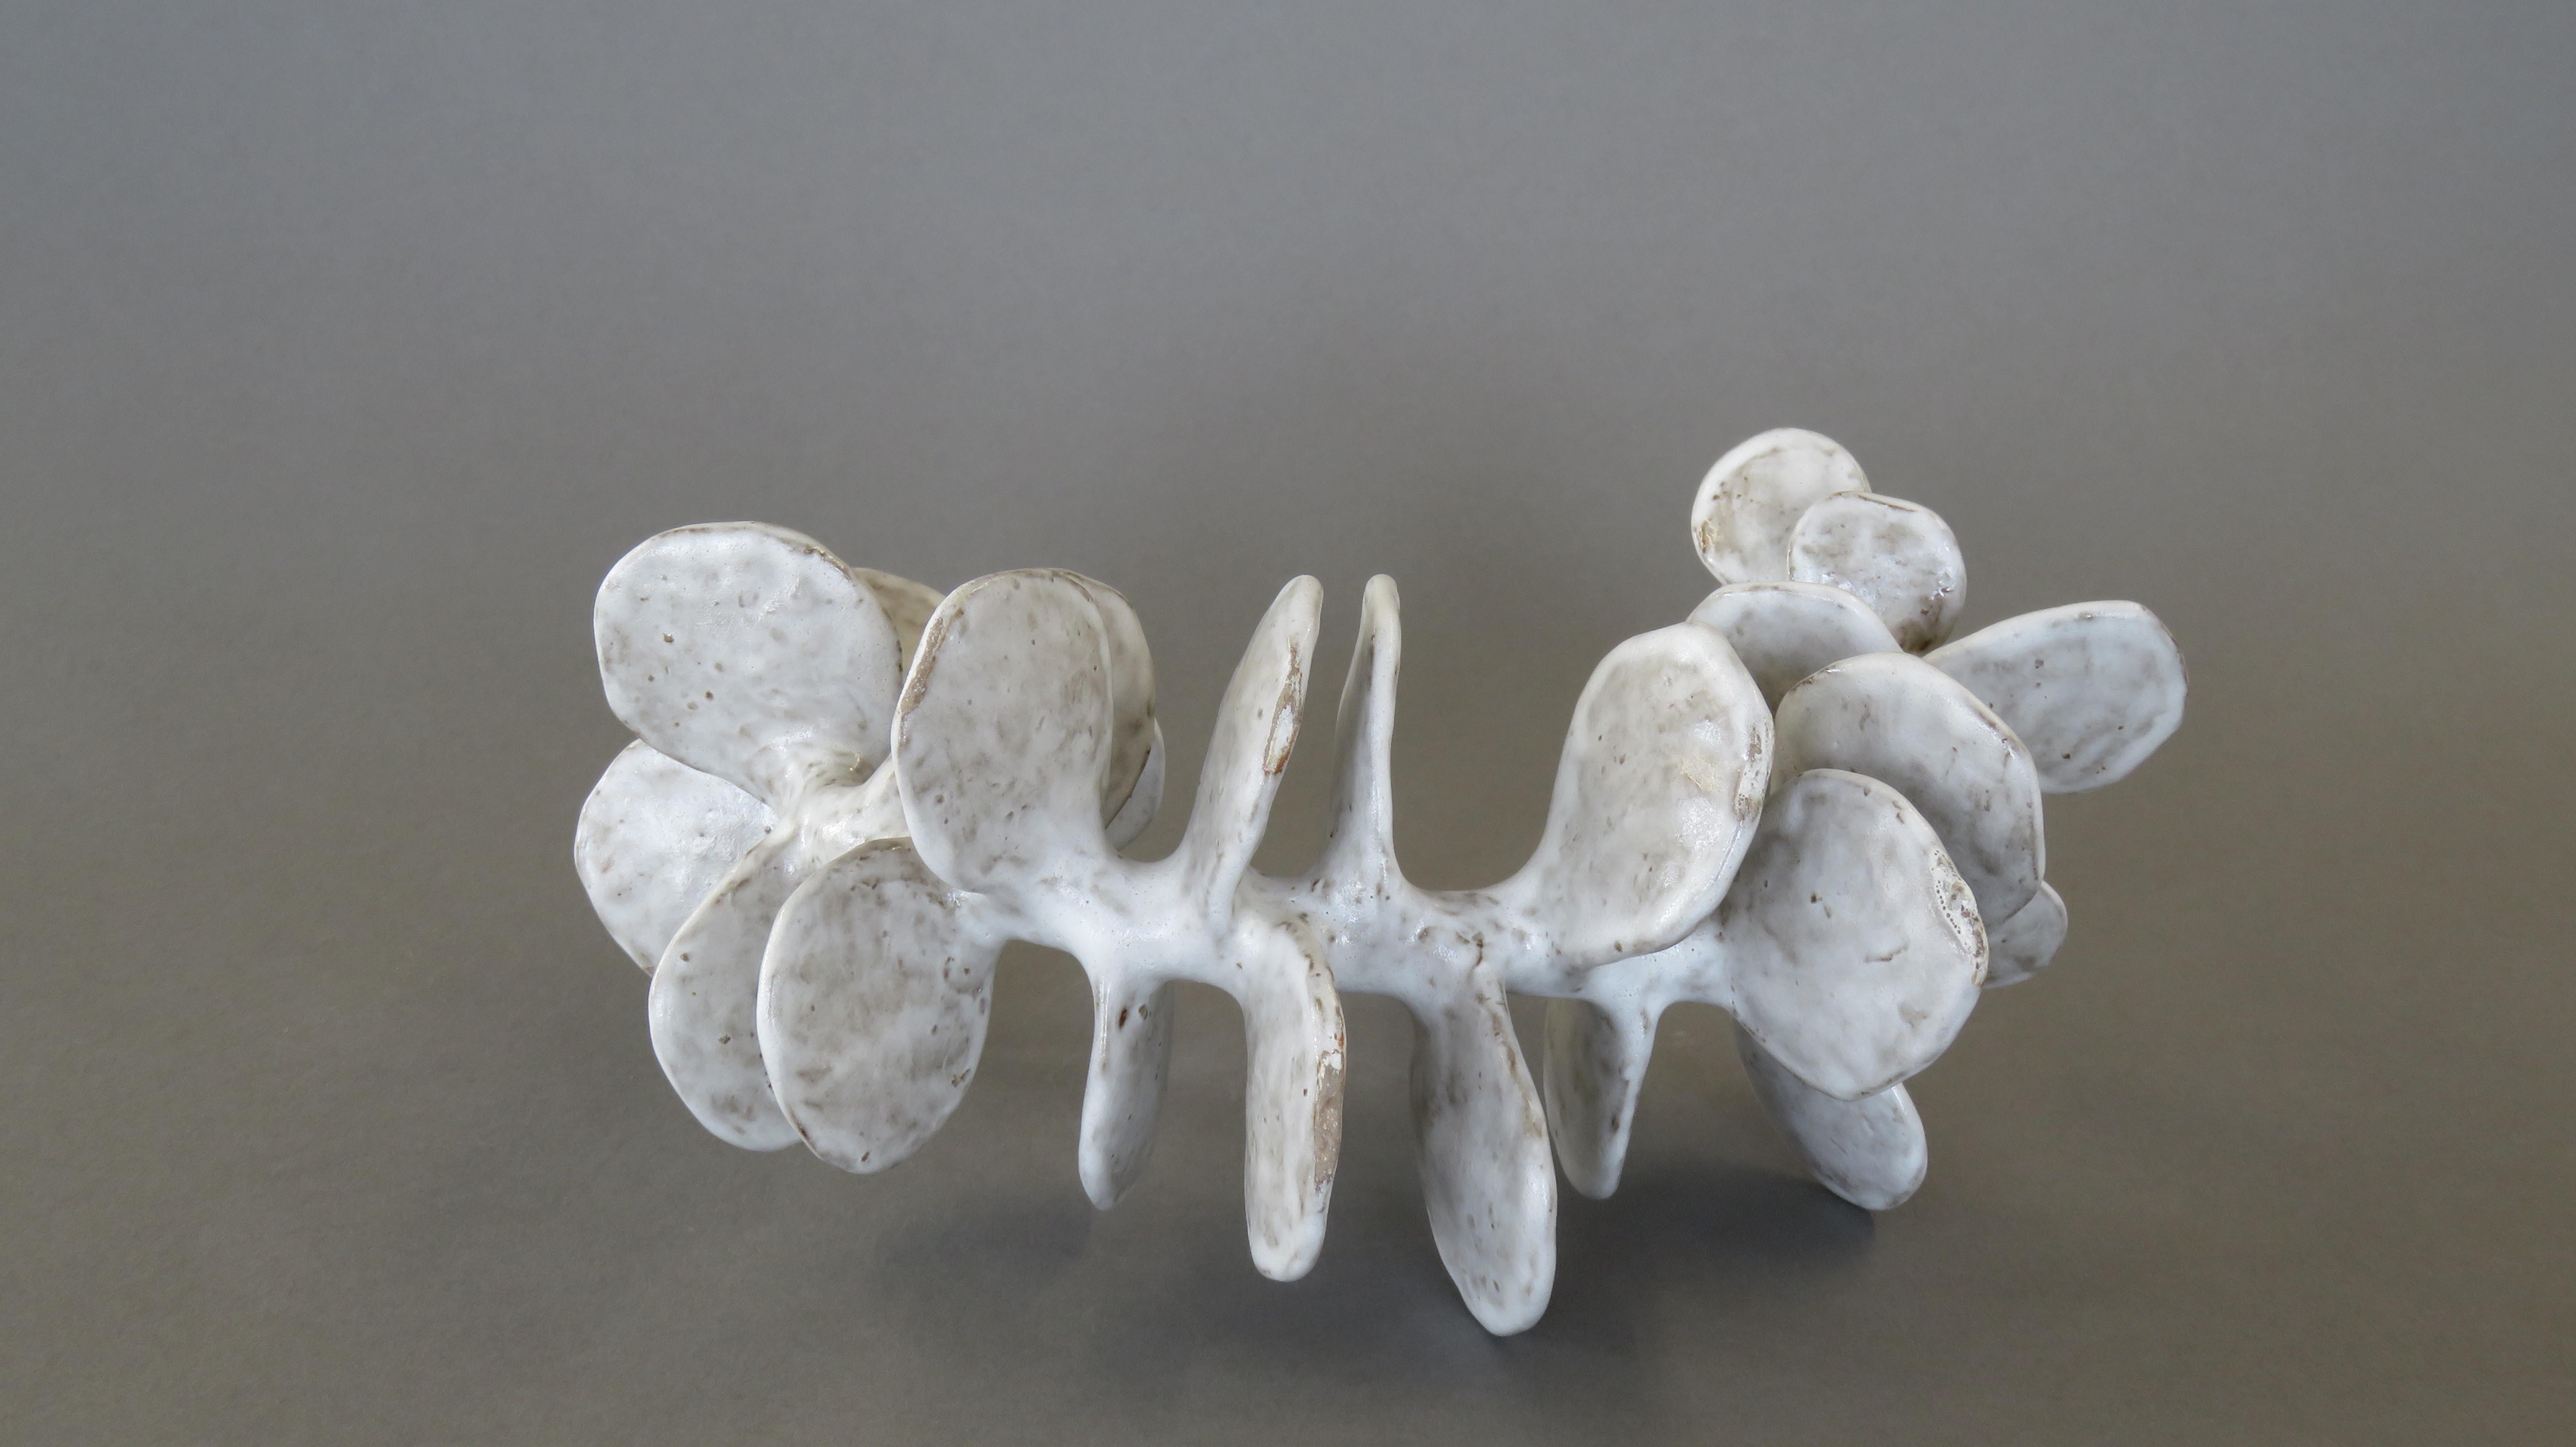 Handgefertigte Keramik-Skulptur:: Liegende Skelett-Wirbelsäule in gesprenkeltem Weiß 6